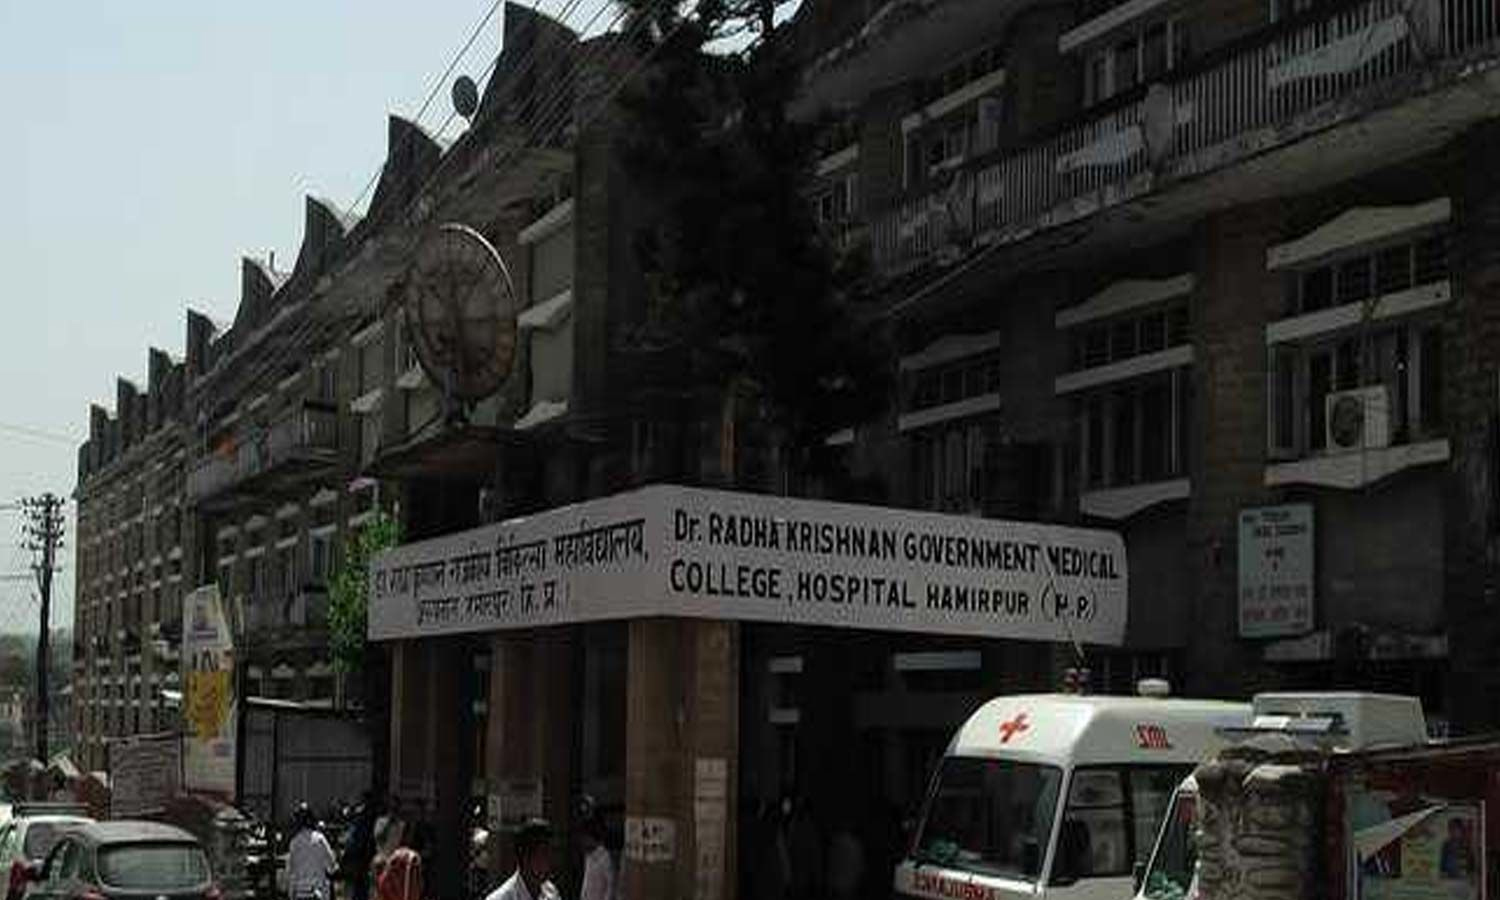 Dr. Radhakrishnan Government Medical College, Hamirpur, H.P 